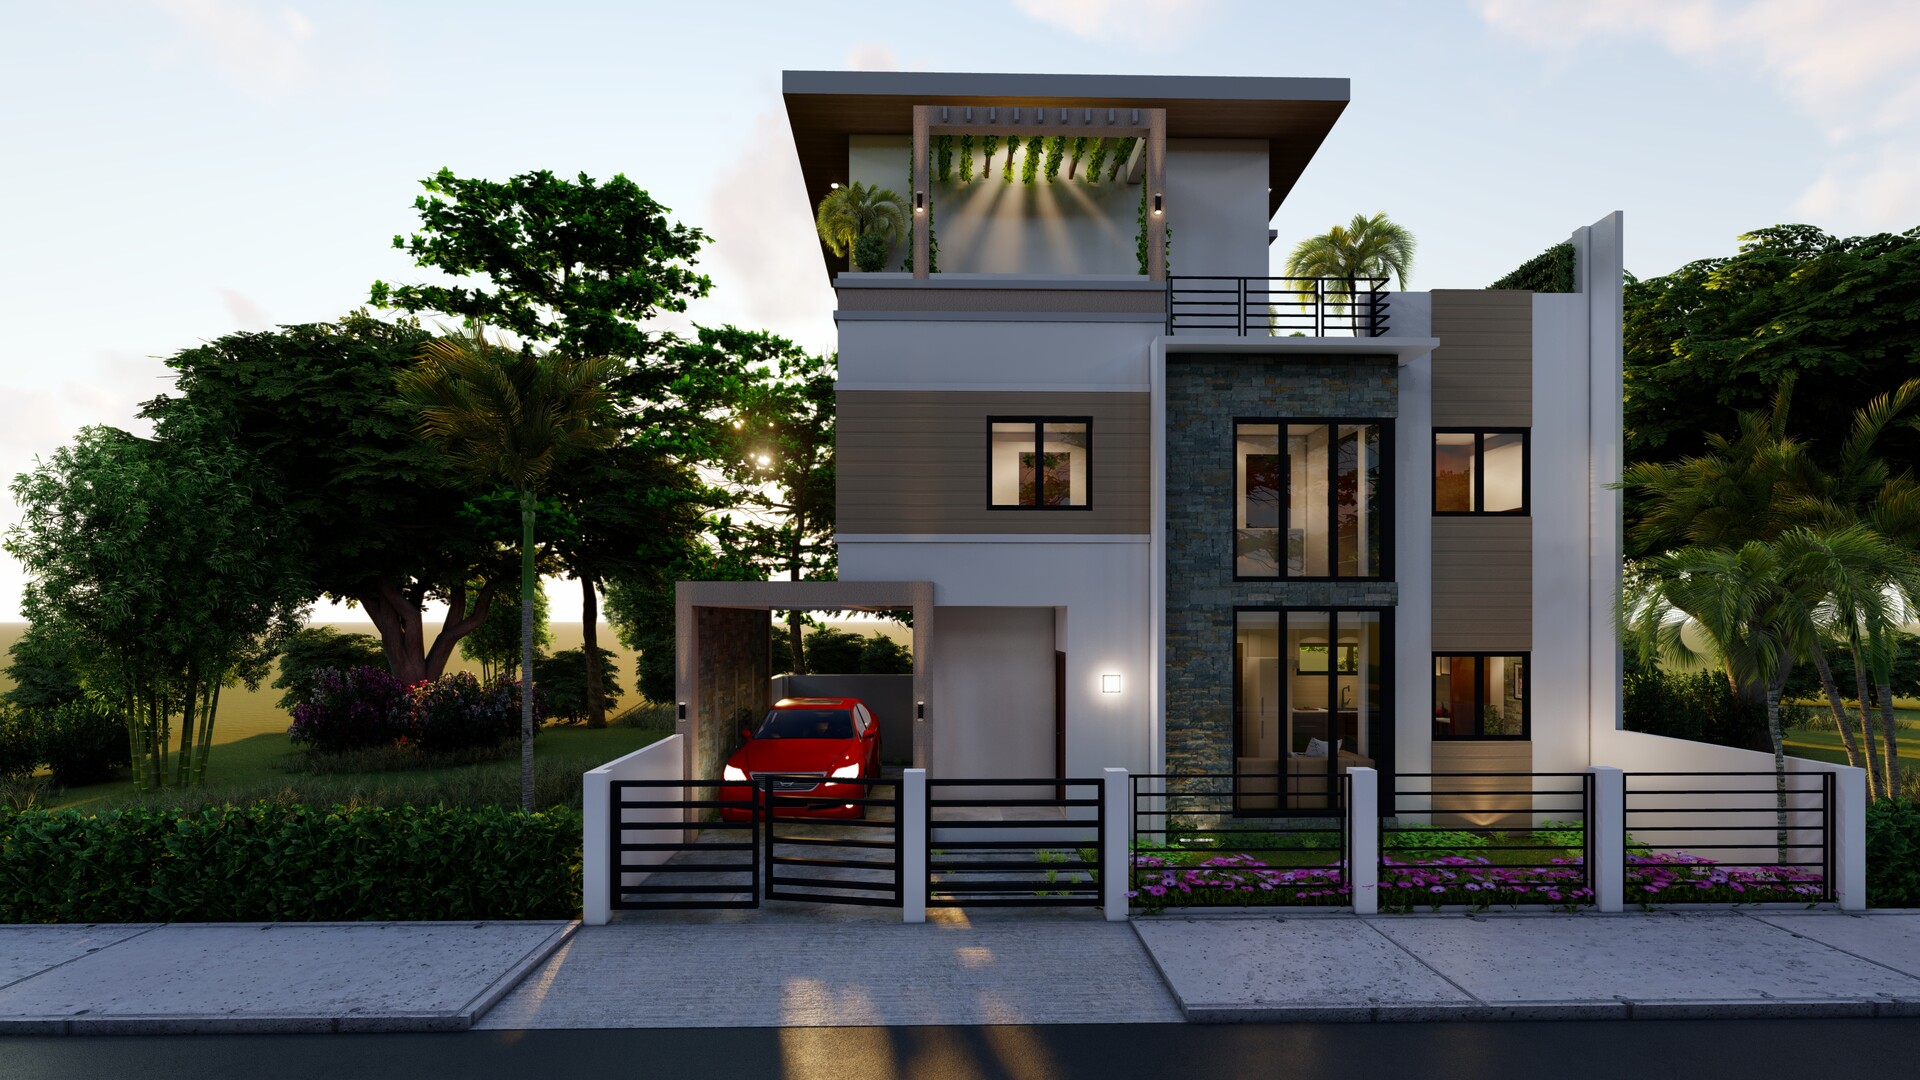 Artstation - 3 Storey House Design 12 X 5 M (166 Sq.M.) | House Design #8